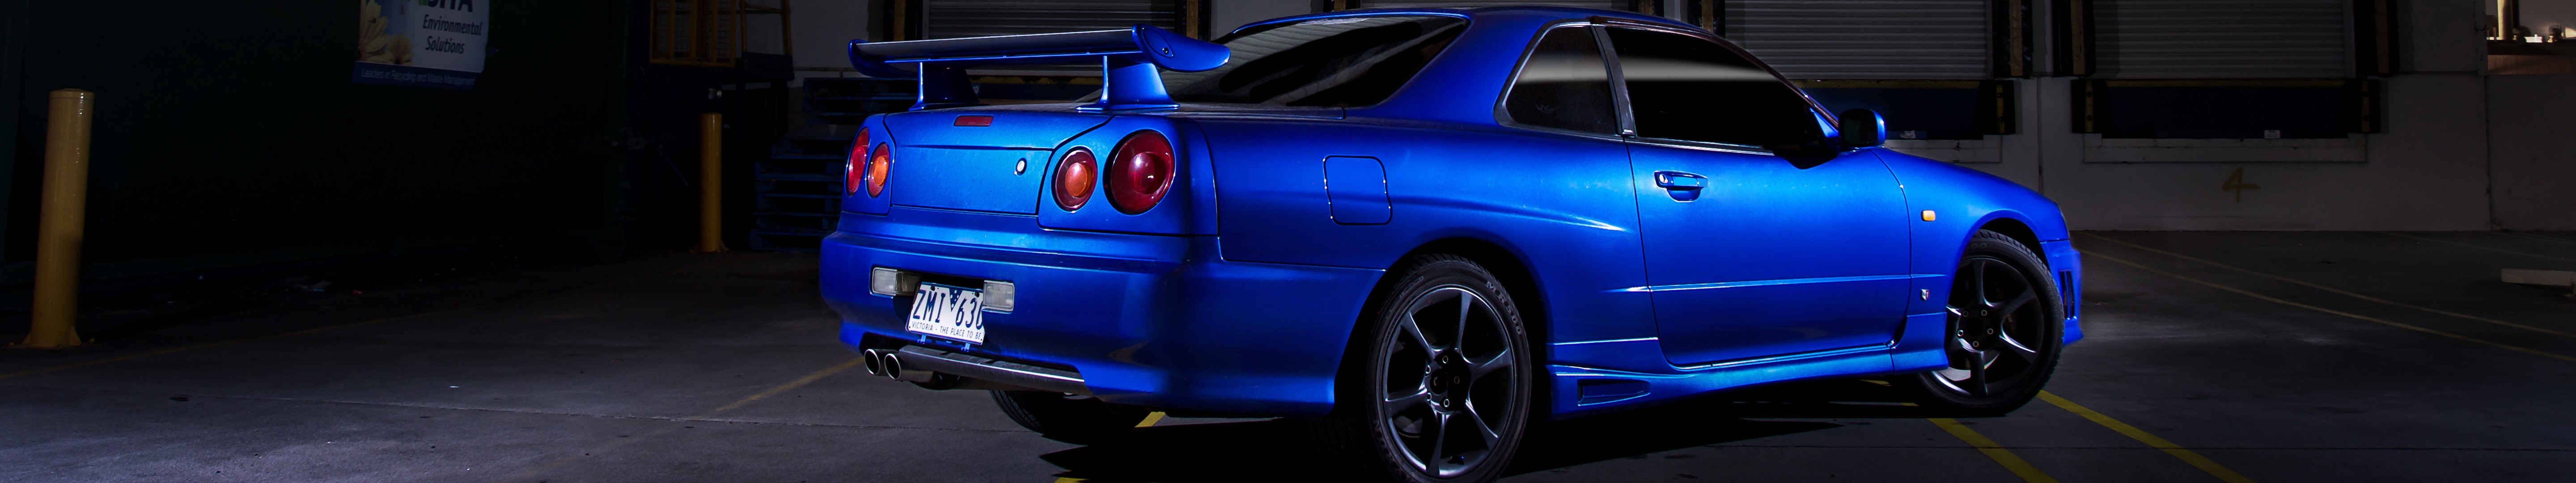 Nissan Skyline Gt R Blue Cars Wallpaper No Wallhaven Cc